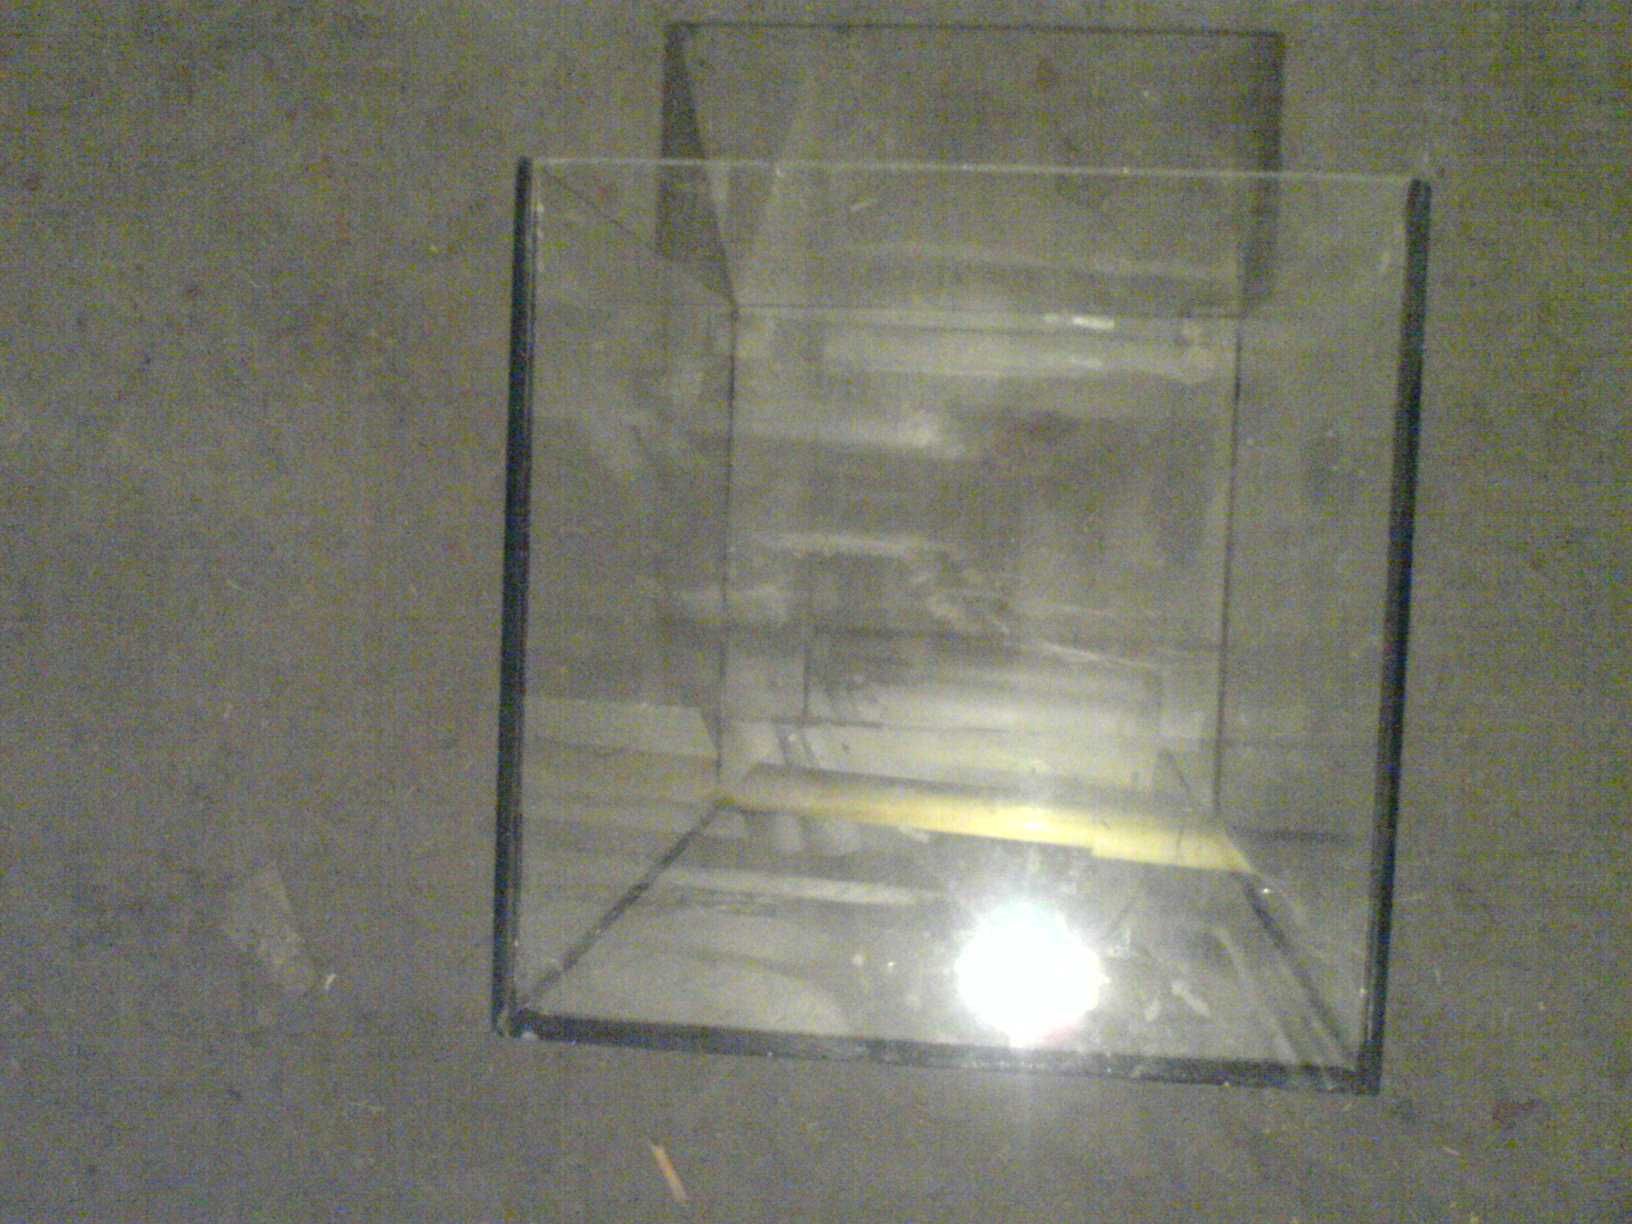 ZBIORNIK SZKLANY 30x20x20 cm GRUBE SZKŁO na donicę akwarium terrarium